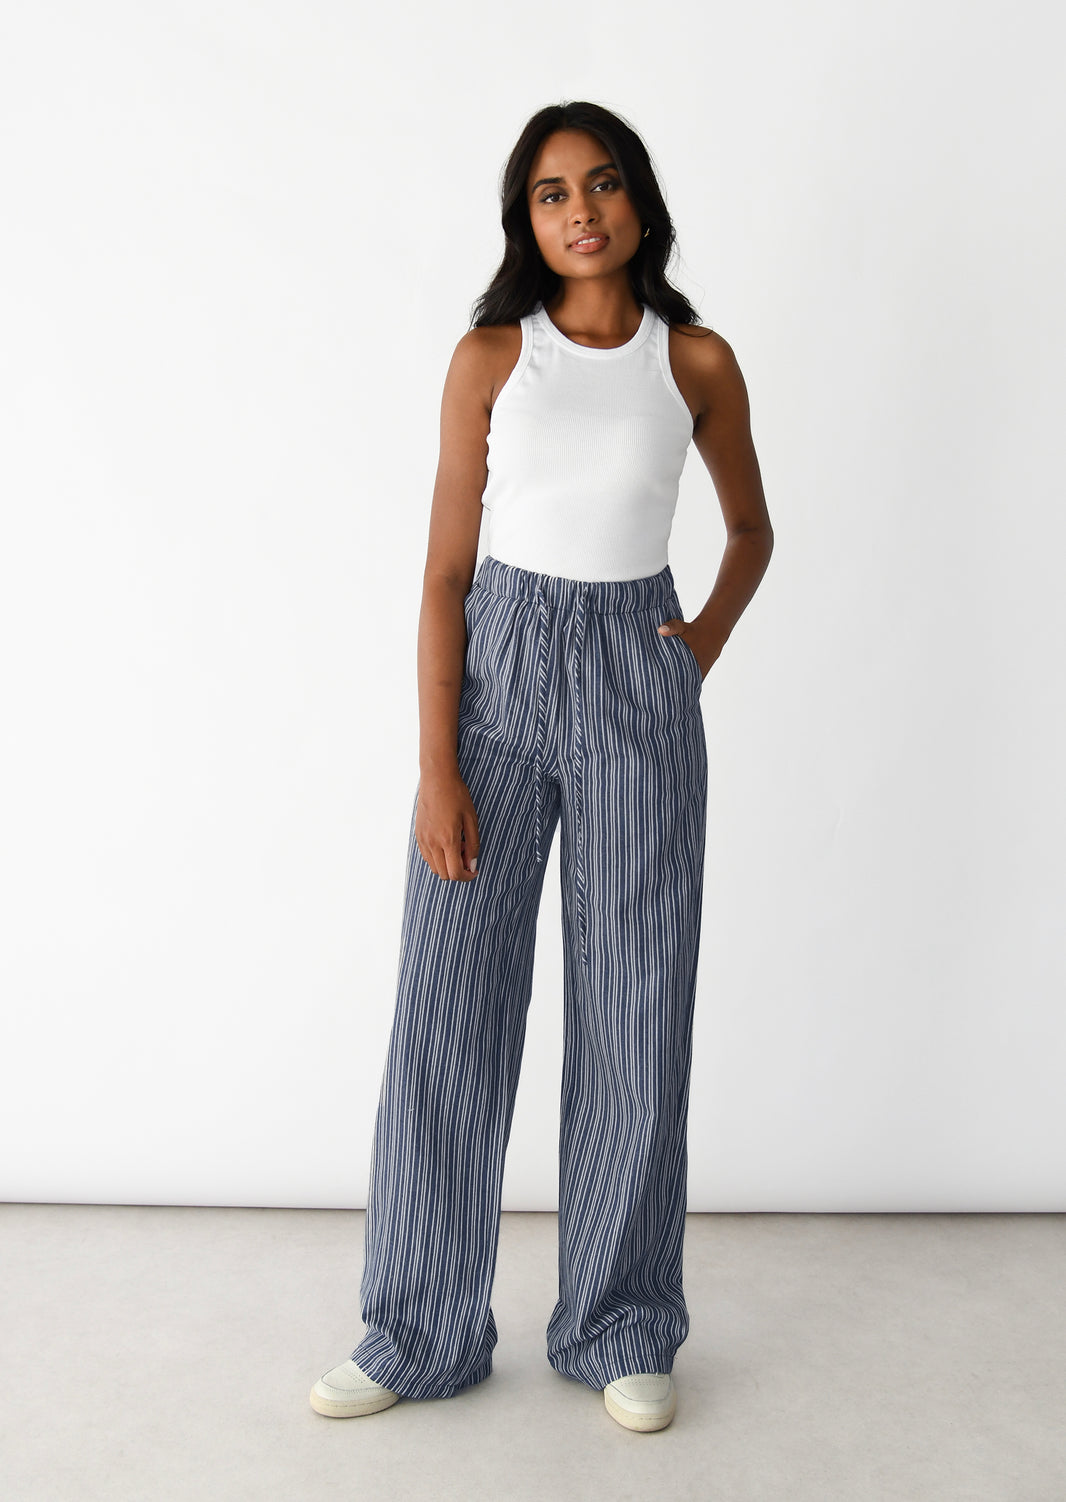 Cotton striped drawstring trousers